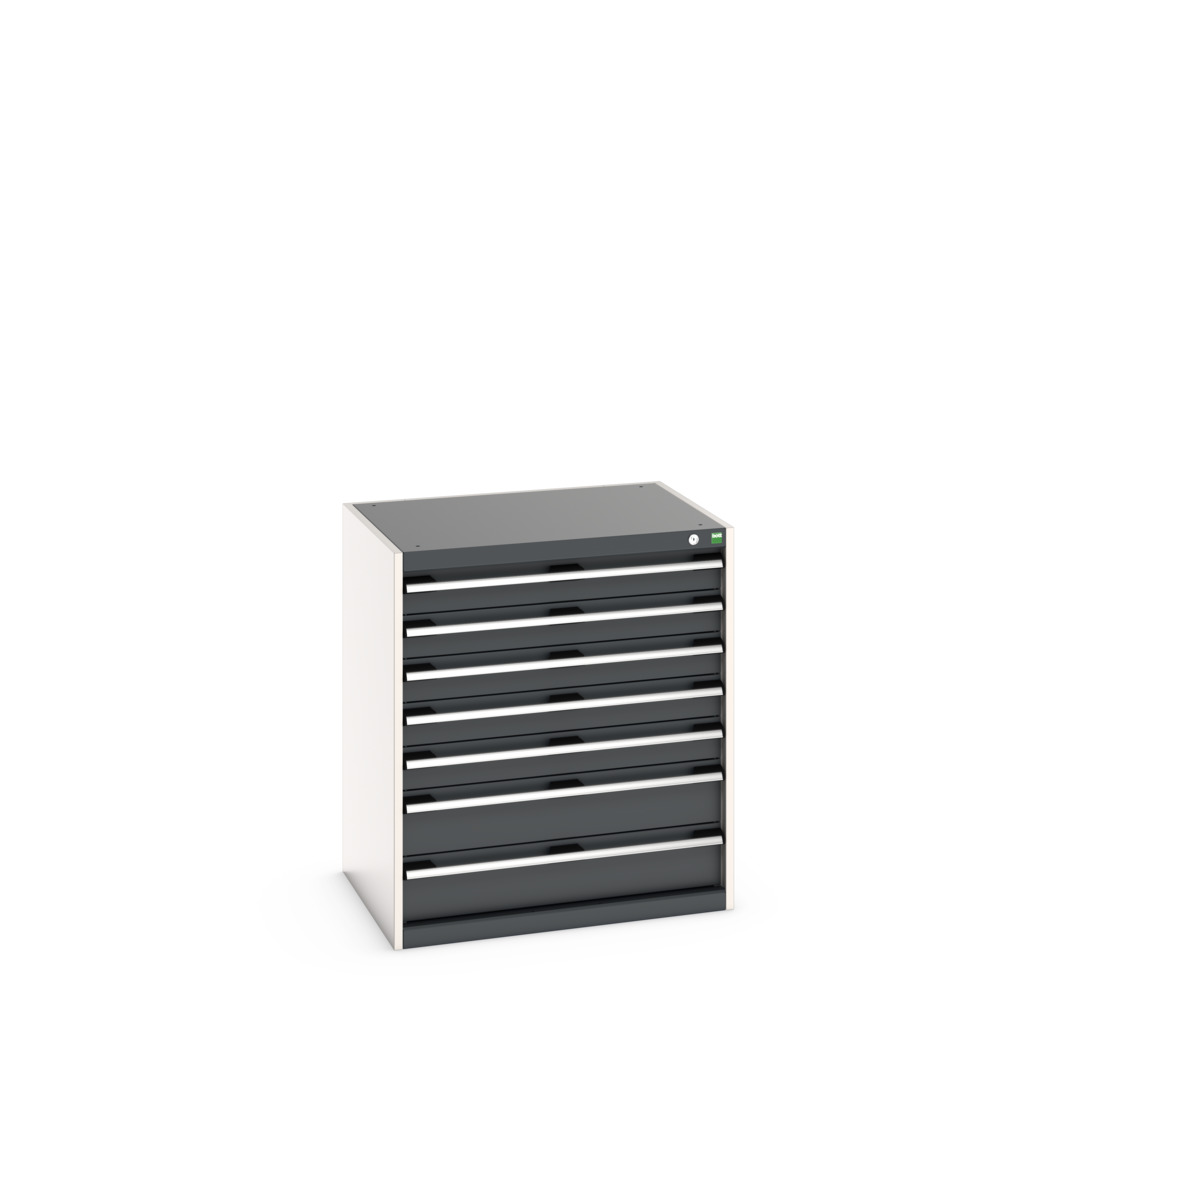 40020042. - cubio drawer cabinet